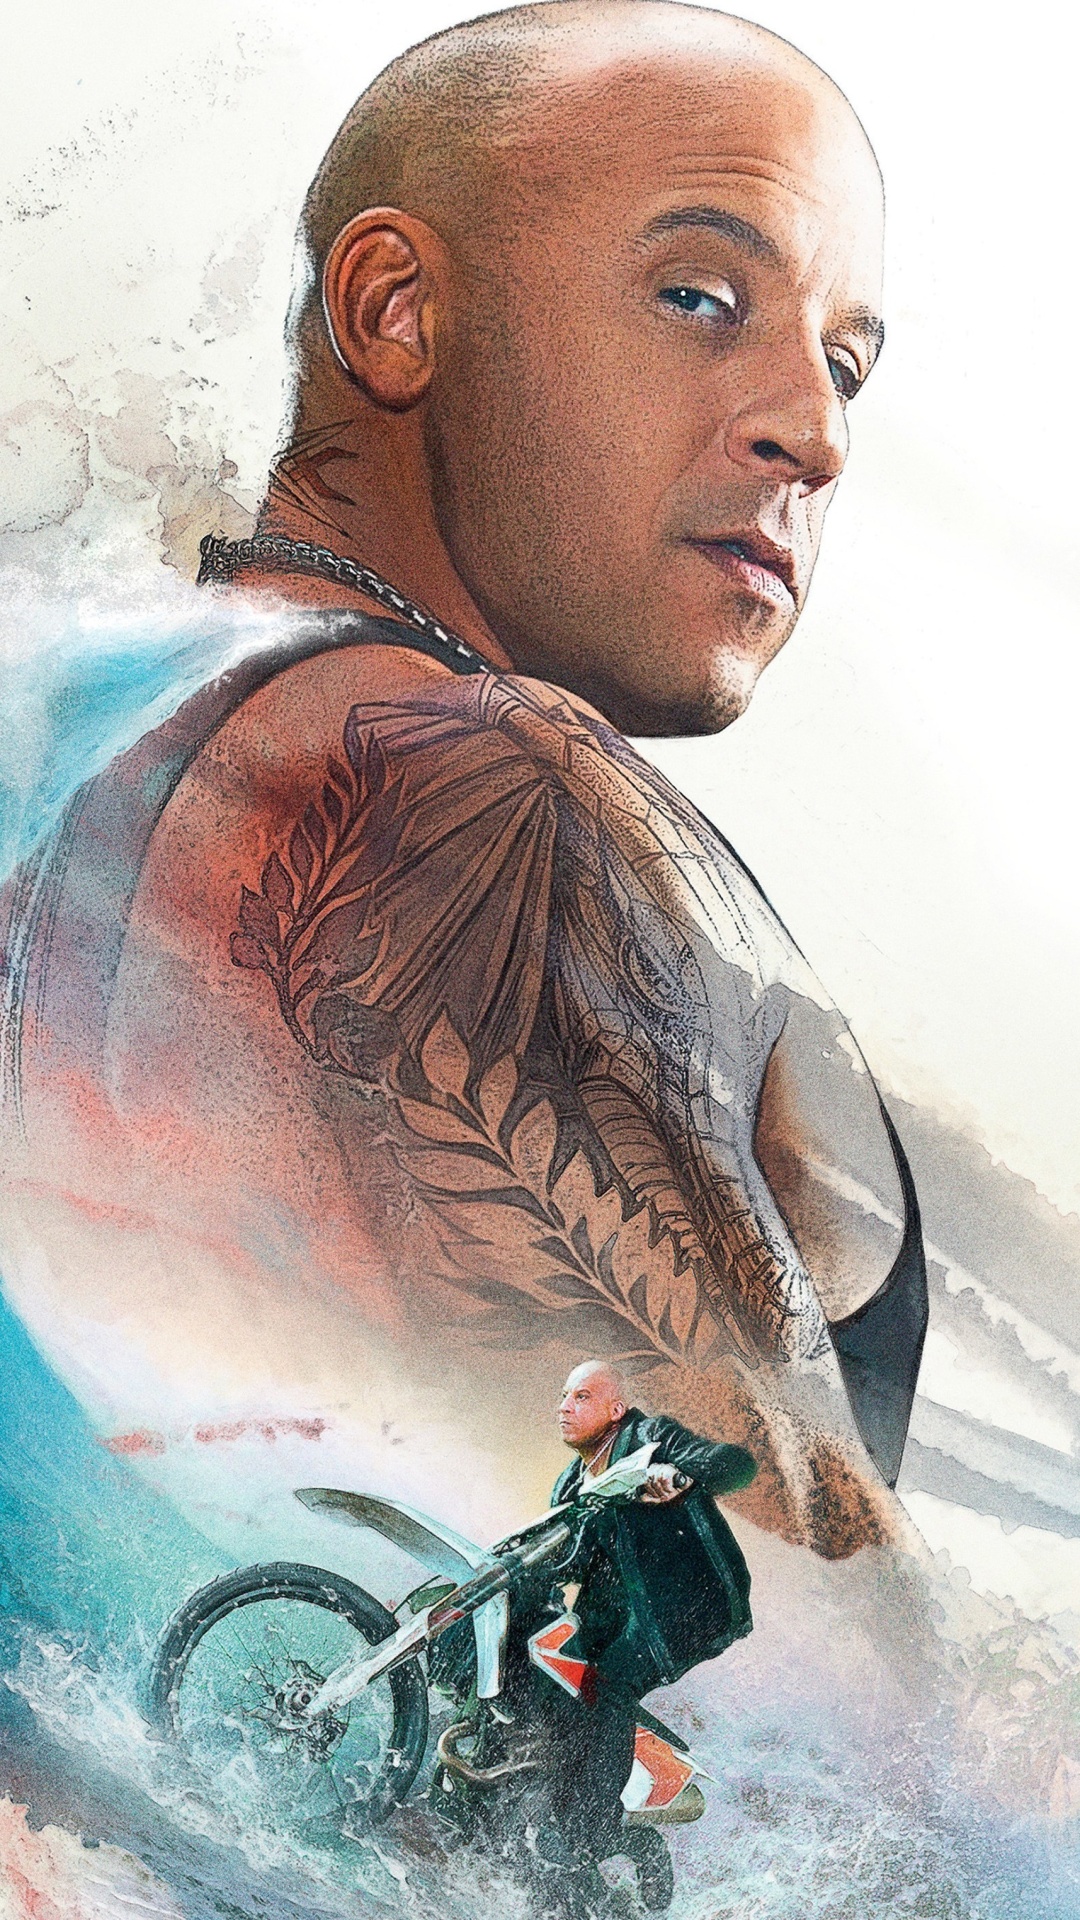 XXX Return of Xander Cage with Vin Diesel wallpaper 1080x1920